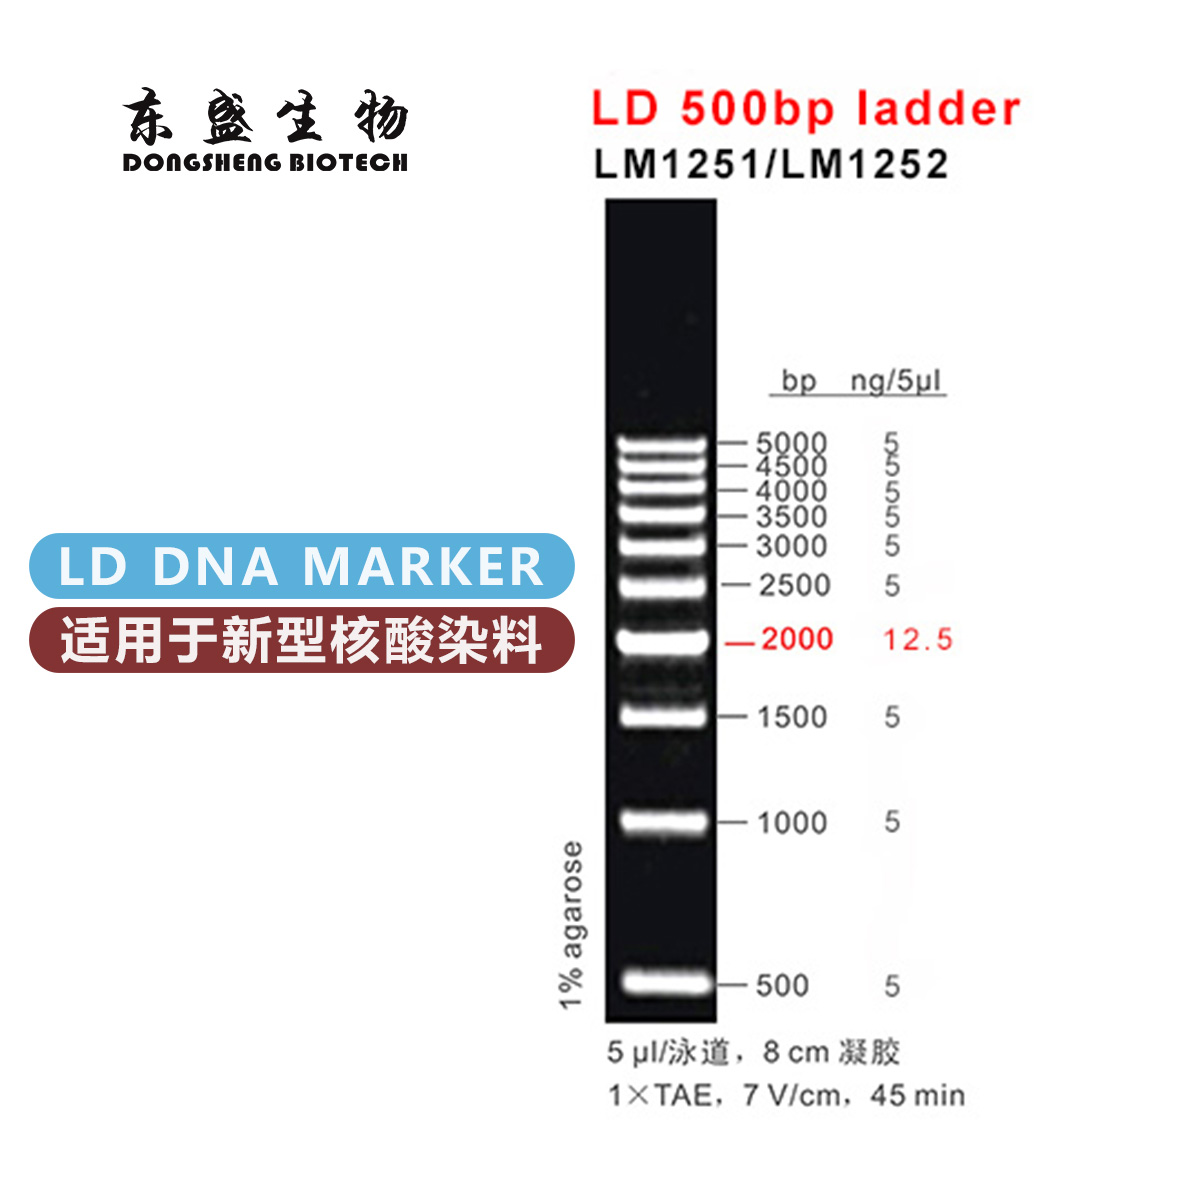 东盛LD 500bp ladder 新型染料专用DNA Marker (LM1251-LM1252)